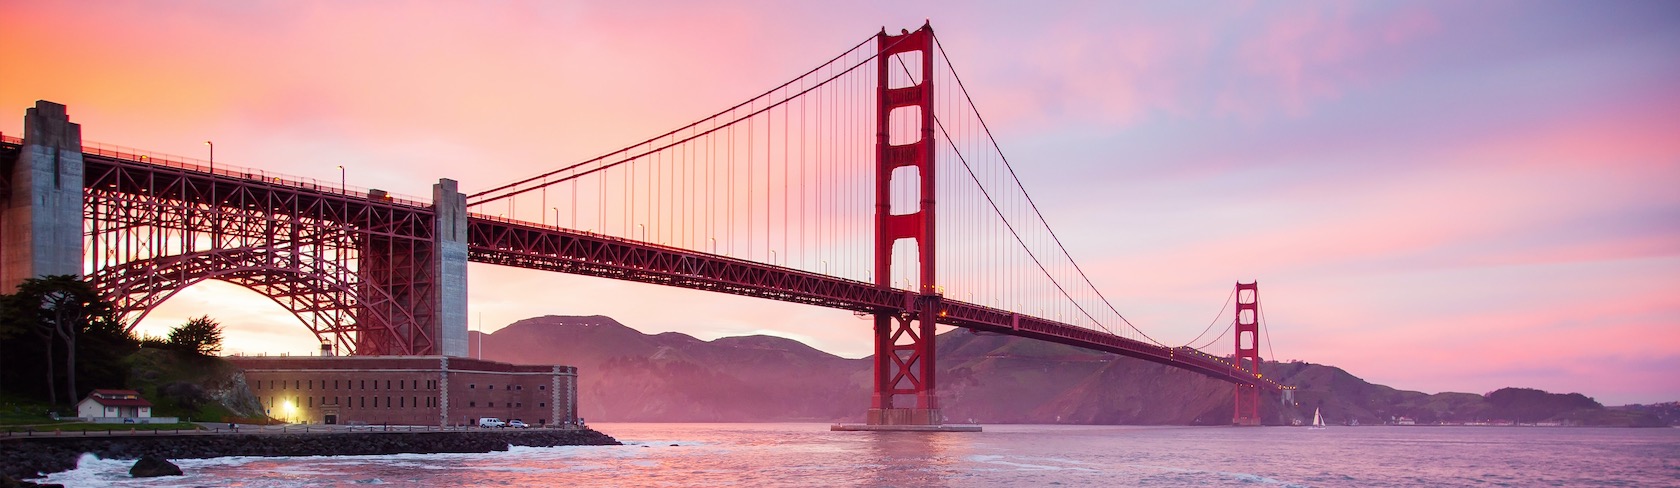 San Francisco Golden Gate Bridge bij zonsondergang